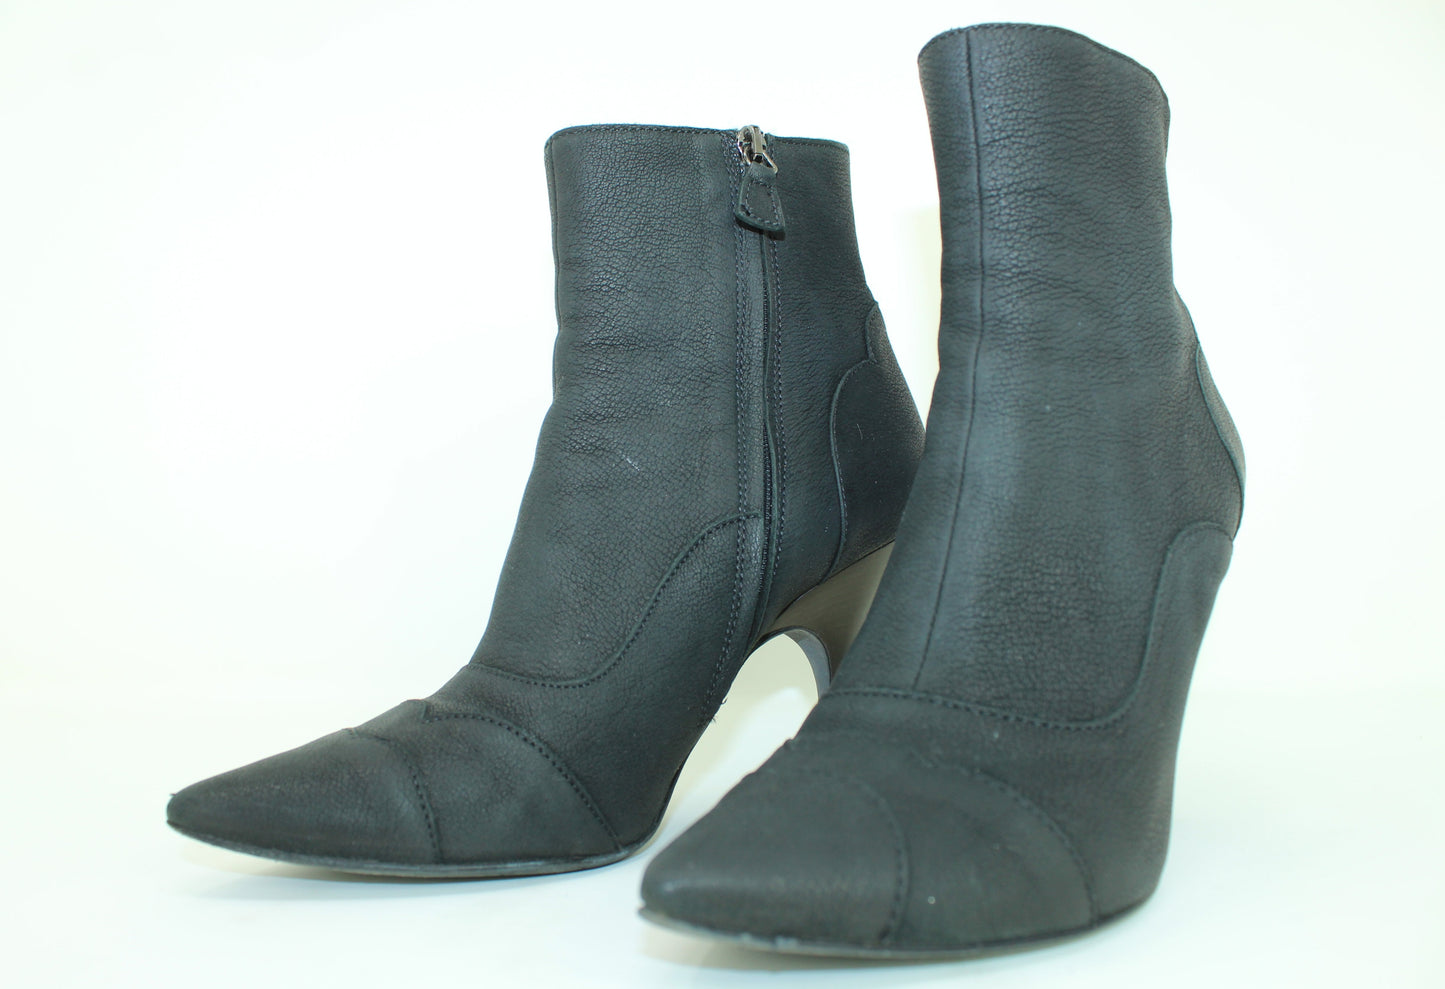 Prada Boots - Size 9